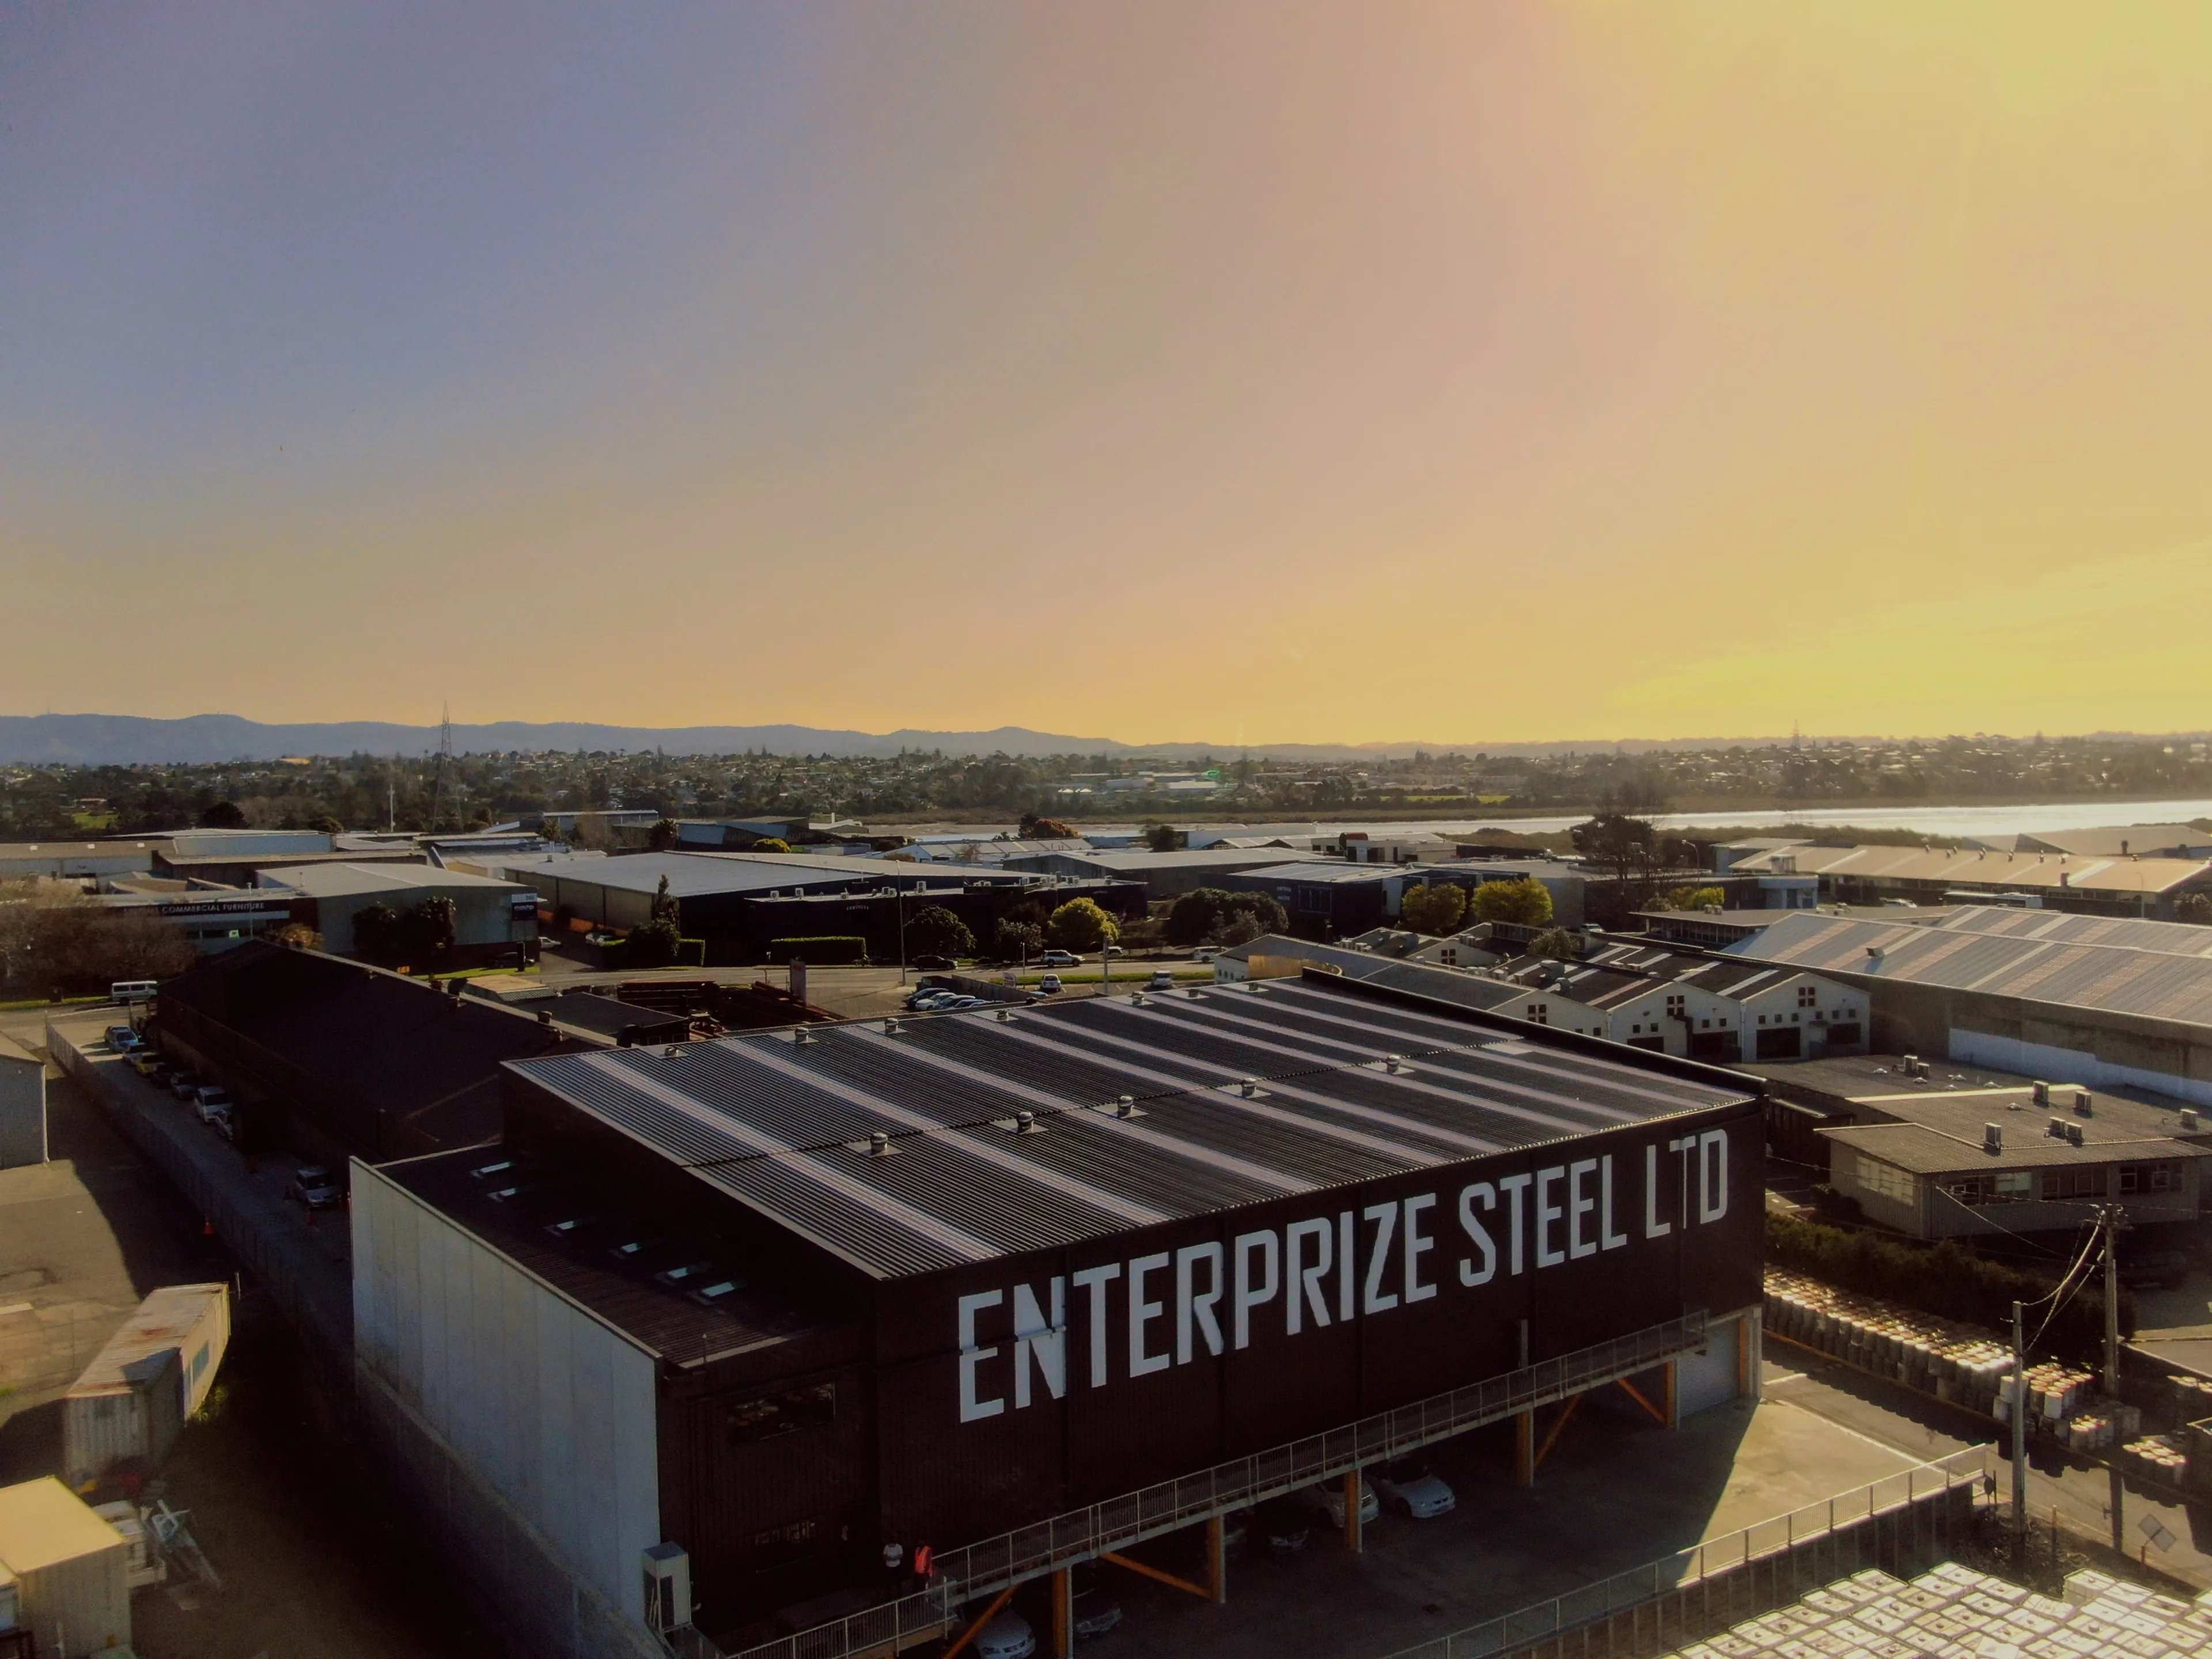 Enterprise steel building